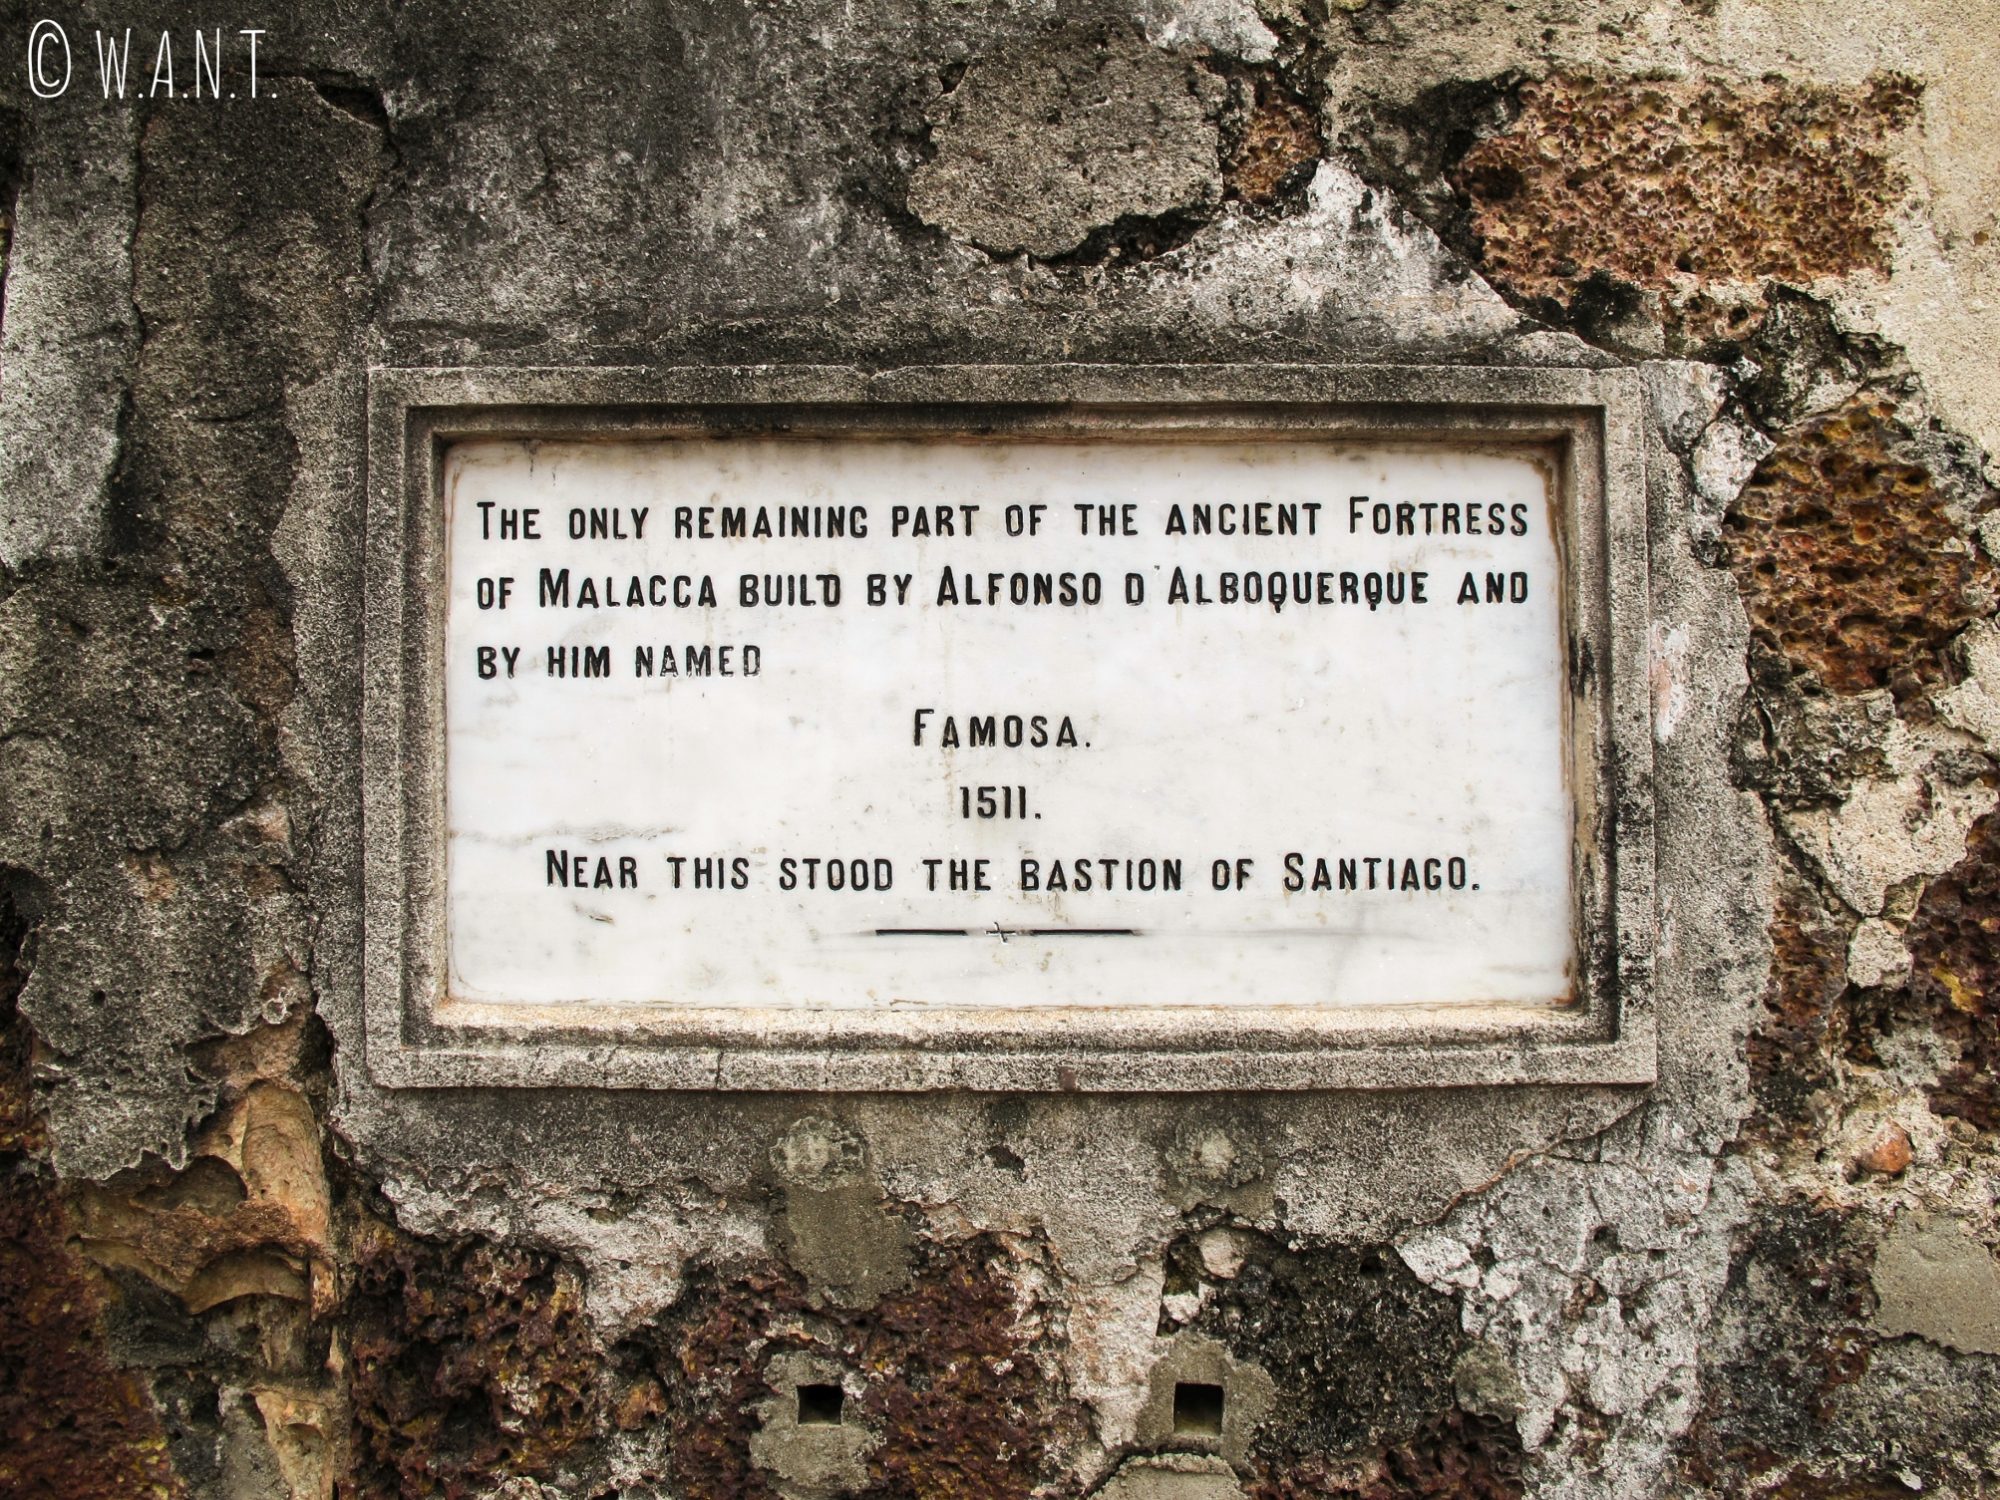 Il ne reste que la Porta de Santiago de la forteresse A'Famosa de Malacca